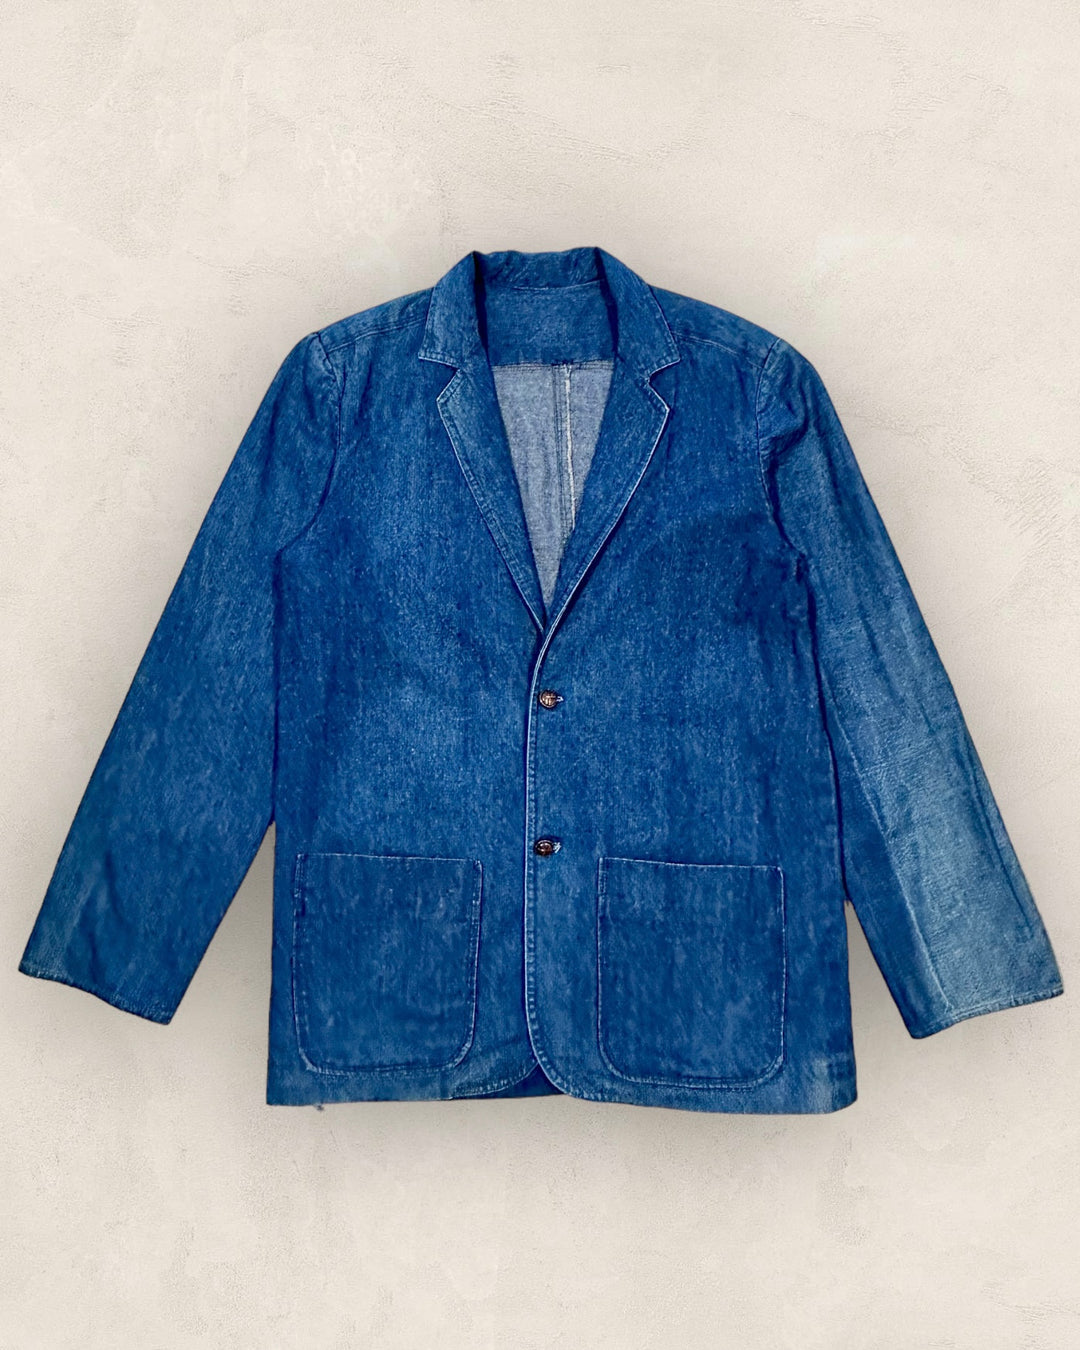 Vintage denim blazer jacket - Size M/L